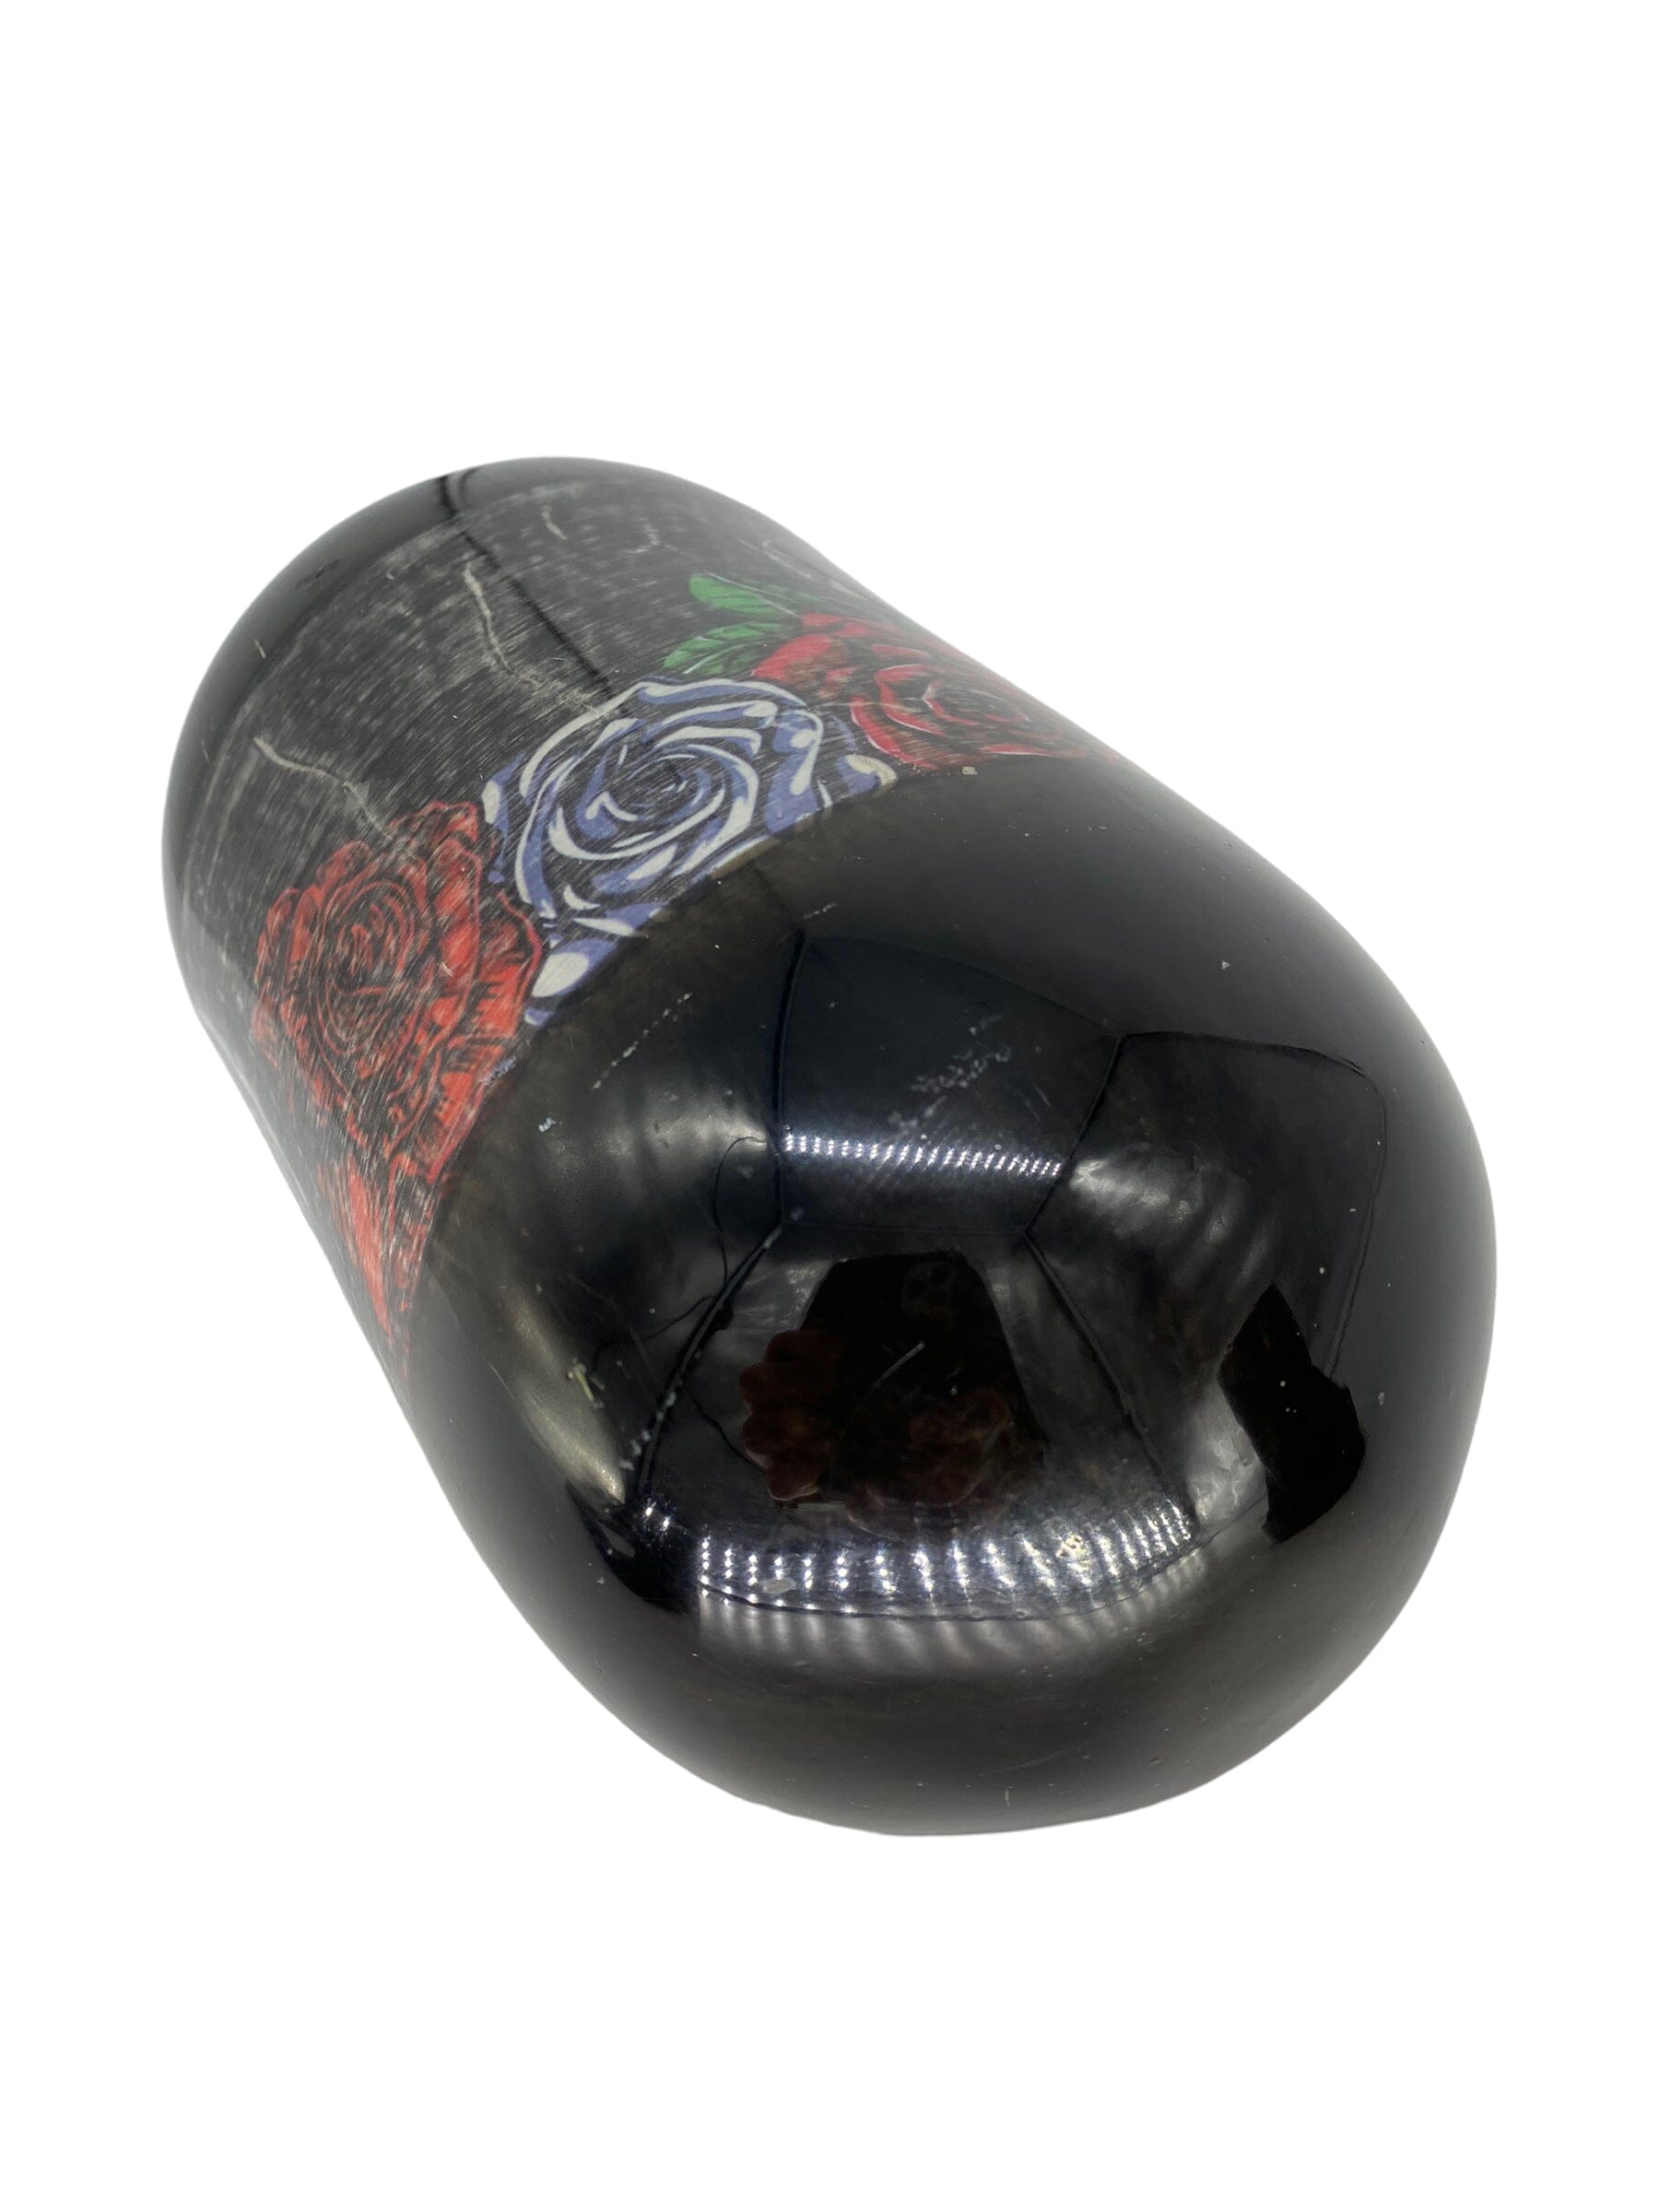 Used Ninja 68/4500 tank Paintball Gun from CPXBrosPaintball Buy/Sell/Trade Paintball Markers, Paintball Hoppers, Paintball Masks, and Hormesis Headbands